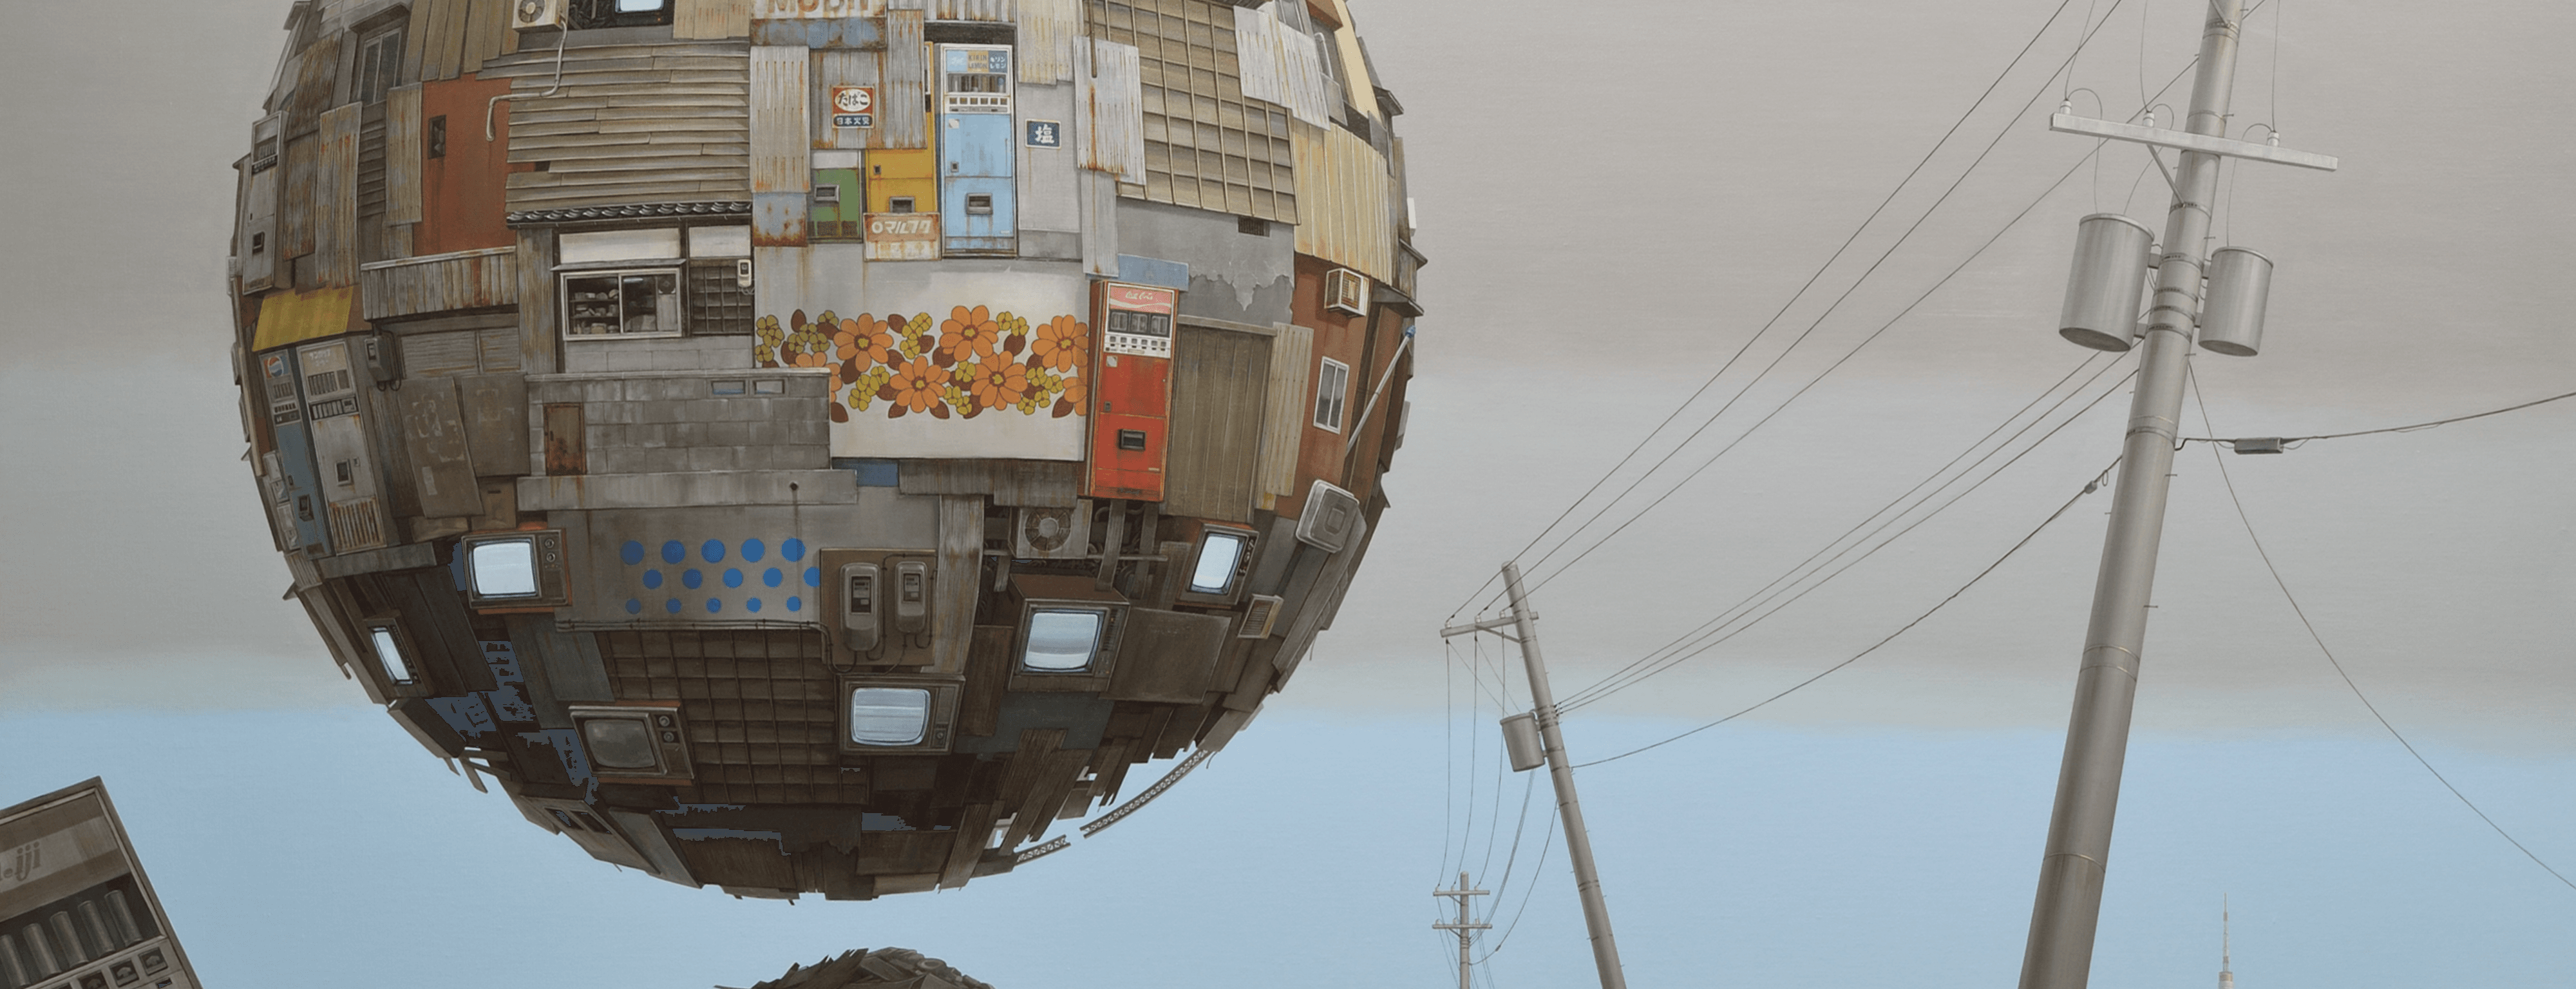 World In The Pocket by Masakatsu Sashie